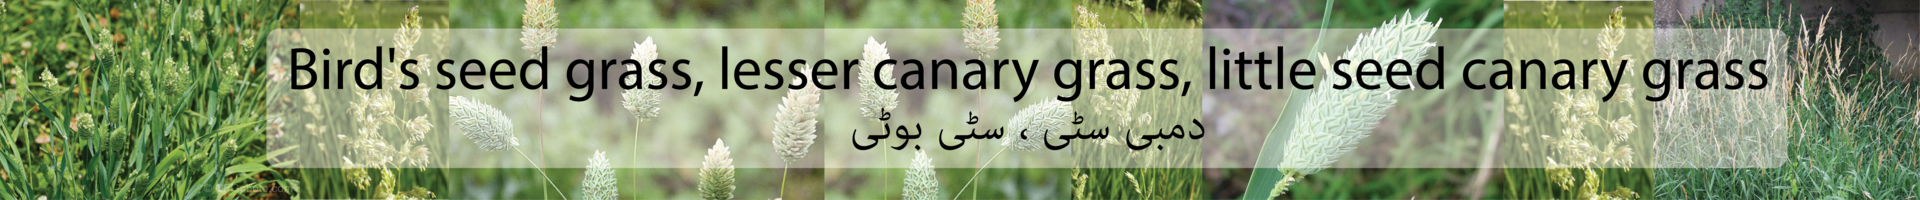 Bird's seed grass, lesser canary grass, little seed canary grass / Ø¯Ù…Ø¨ÛŒ Ø³Ù¹ÛŒ ØŒ Ø³Ù¹ÛŒ Ø¨ÙˆÙ¹ÛŒ